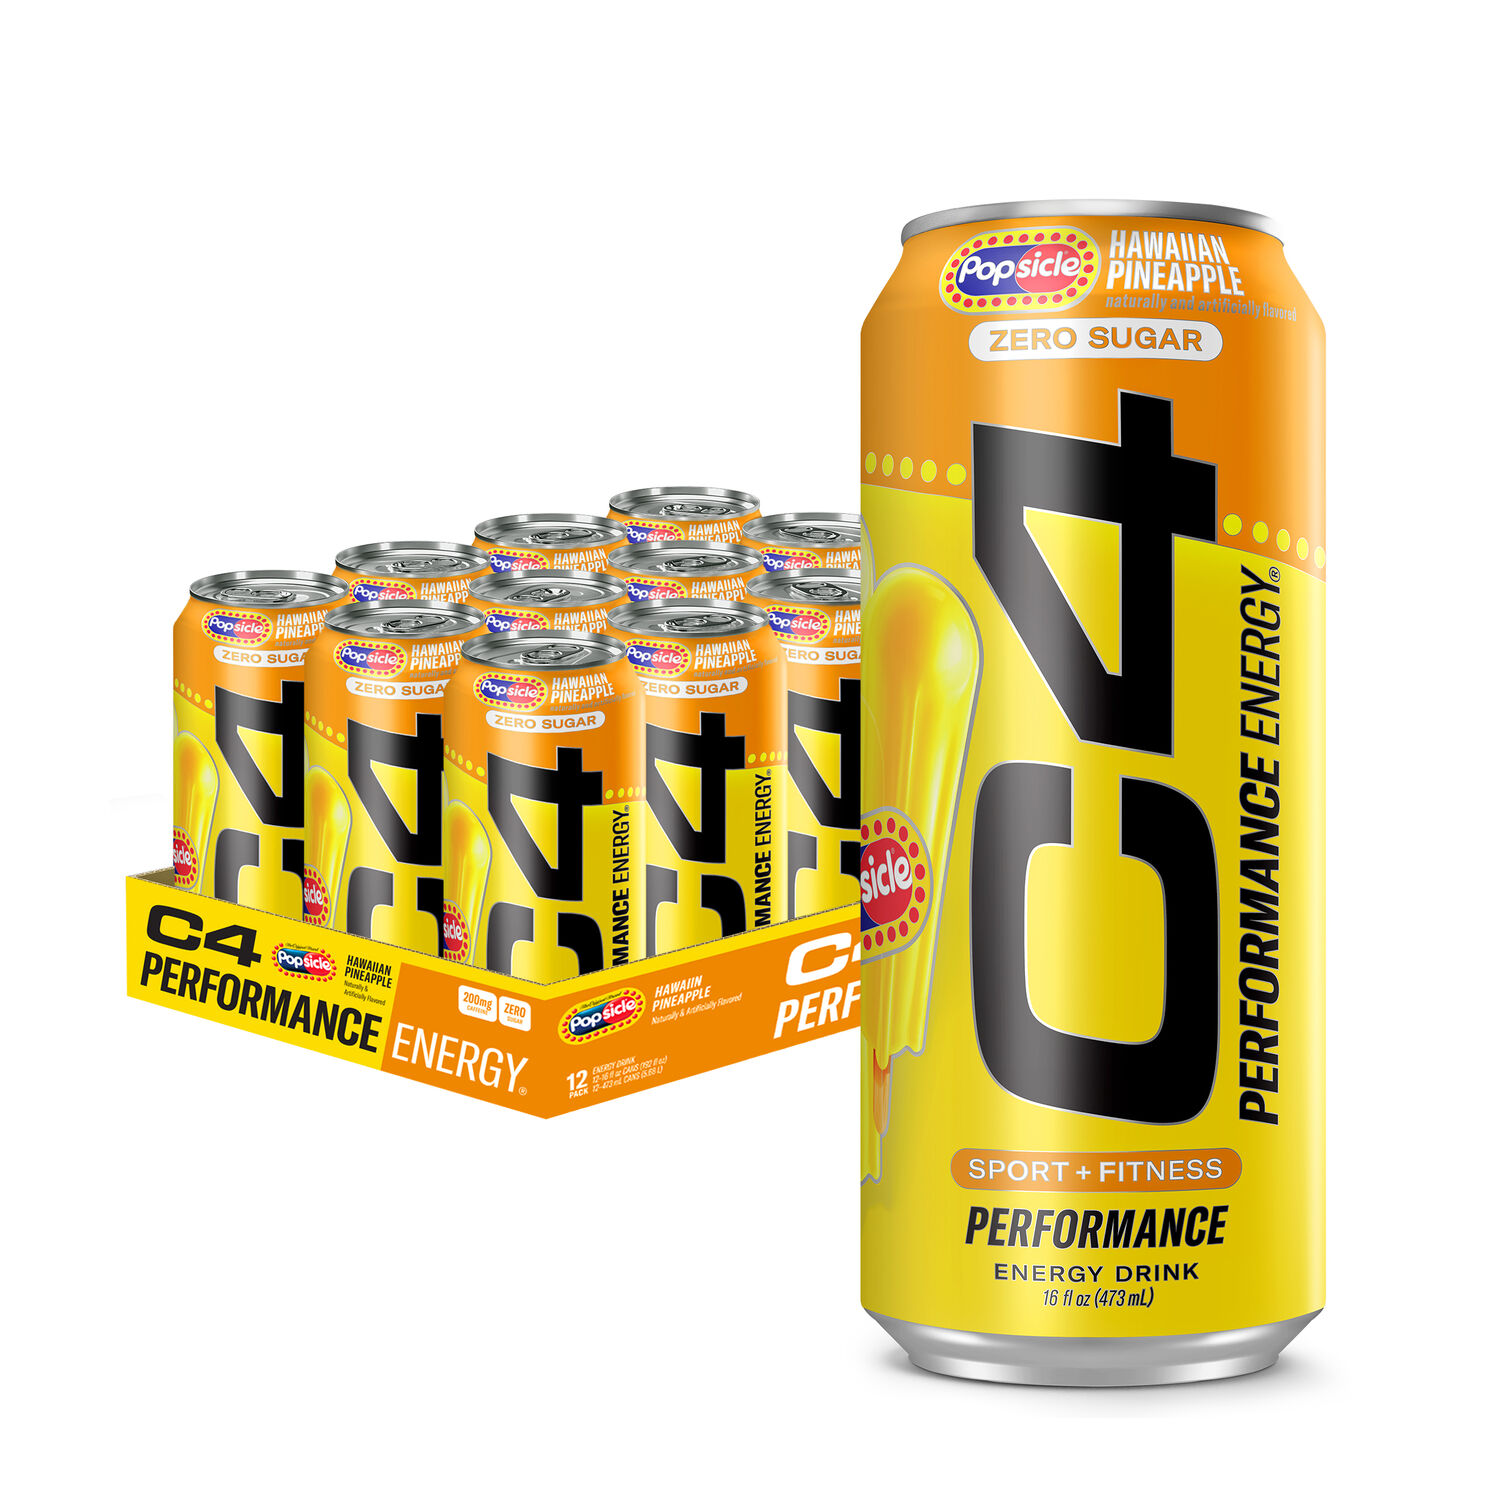 Cellucor C4 Performance Energy Drink - Hawaiian Pineapple - 16Oz. (12 Cans) - Zero Sugar